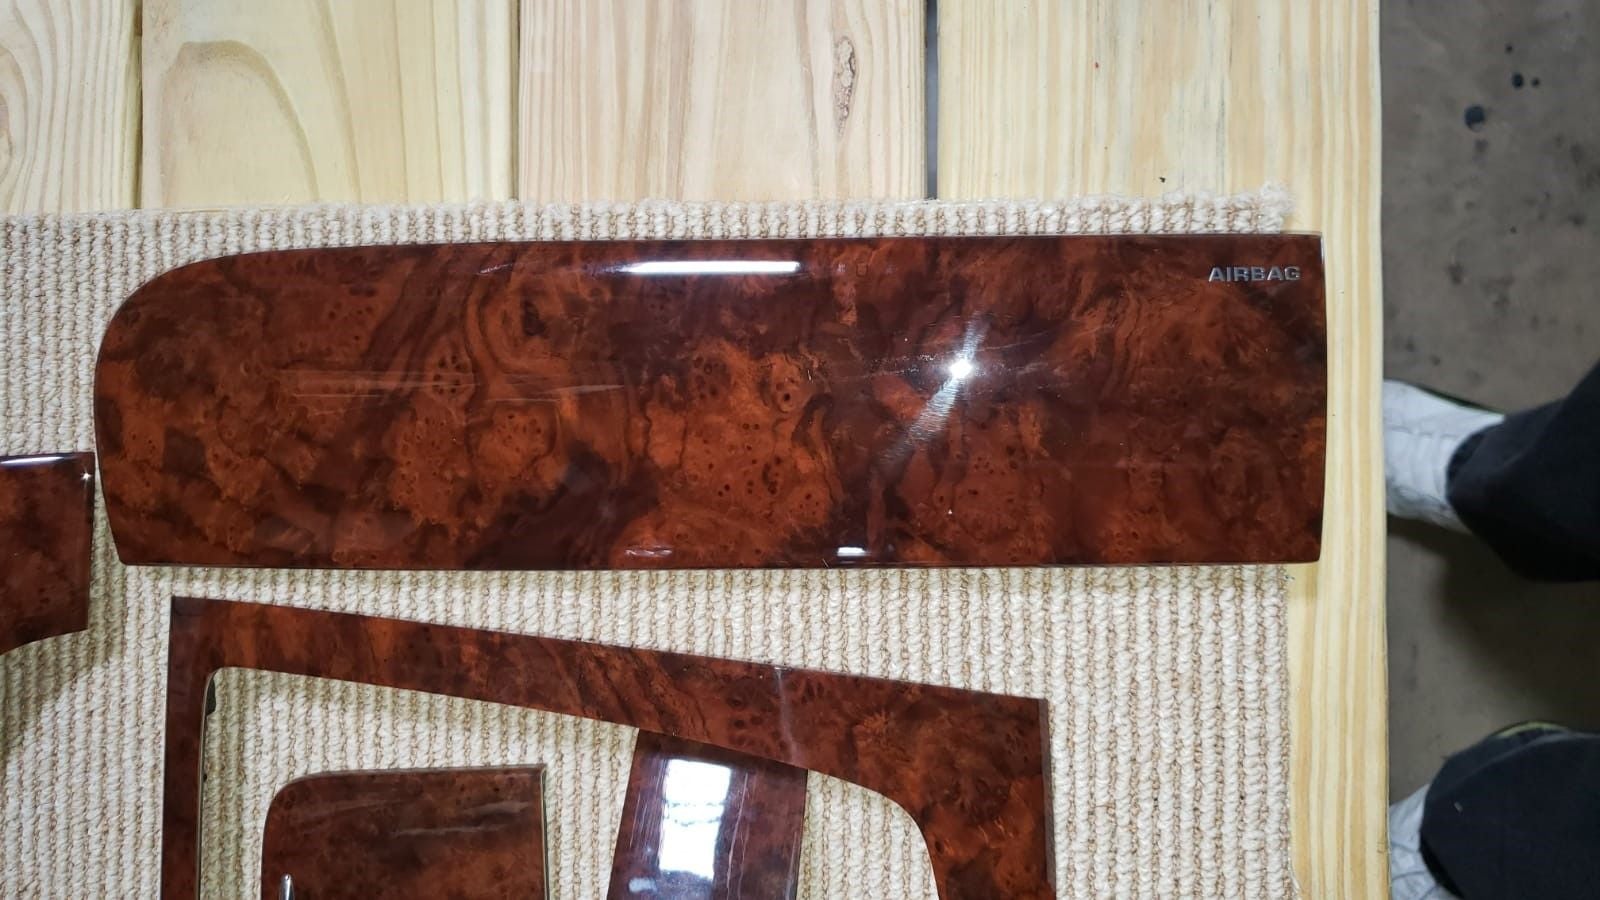 Interior/Upholstery - Wood Interior X150 Like New Condition $275 - Used - 2008 to 2014 Jaguar XK150 - Marietta, GA 30068, United States